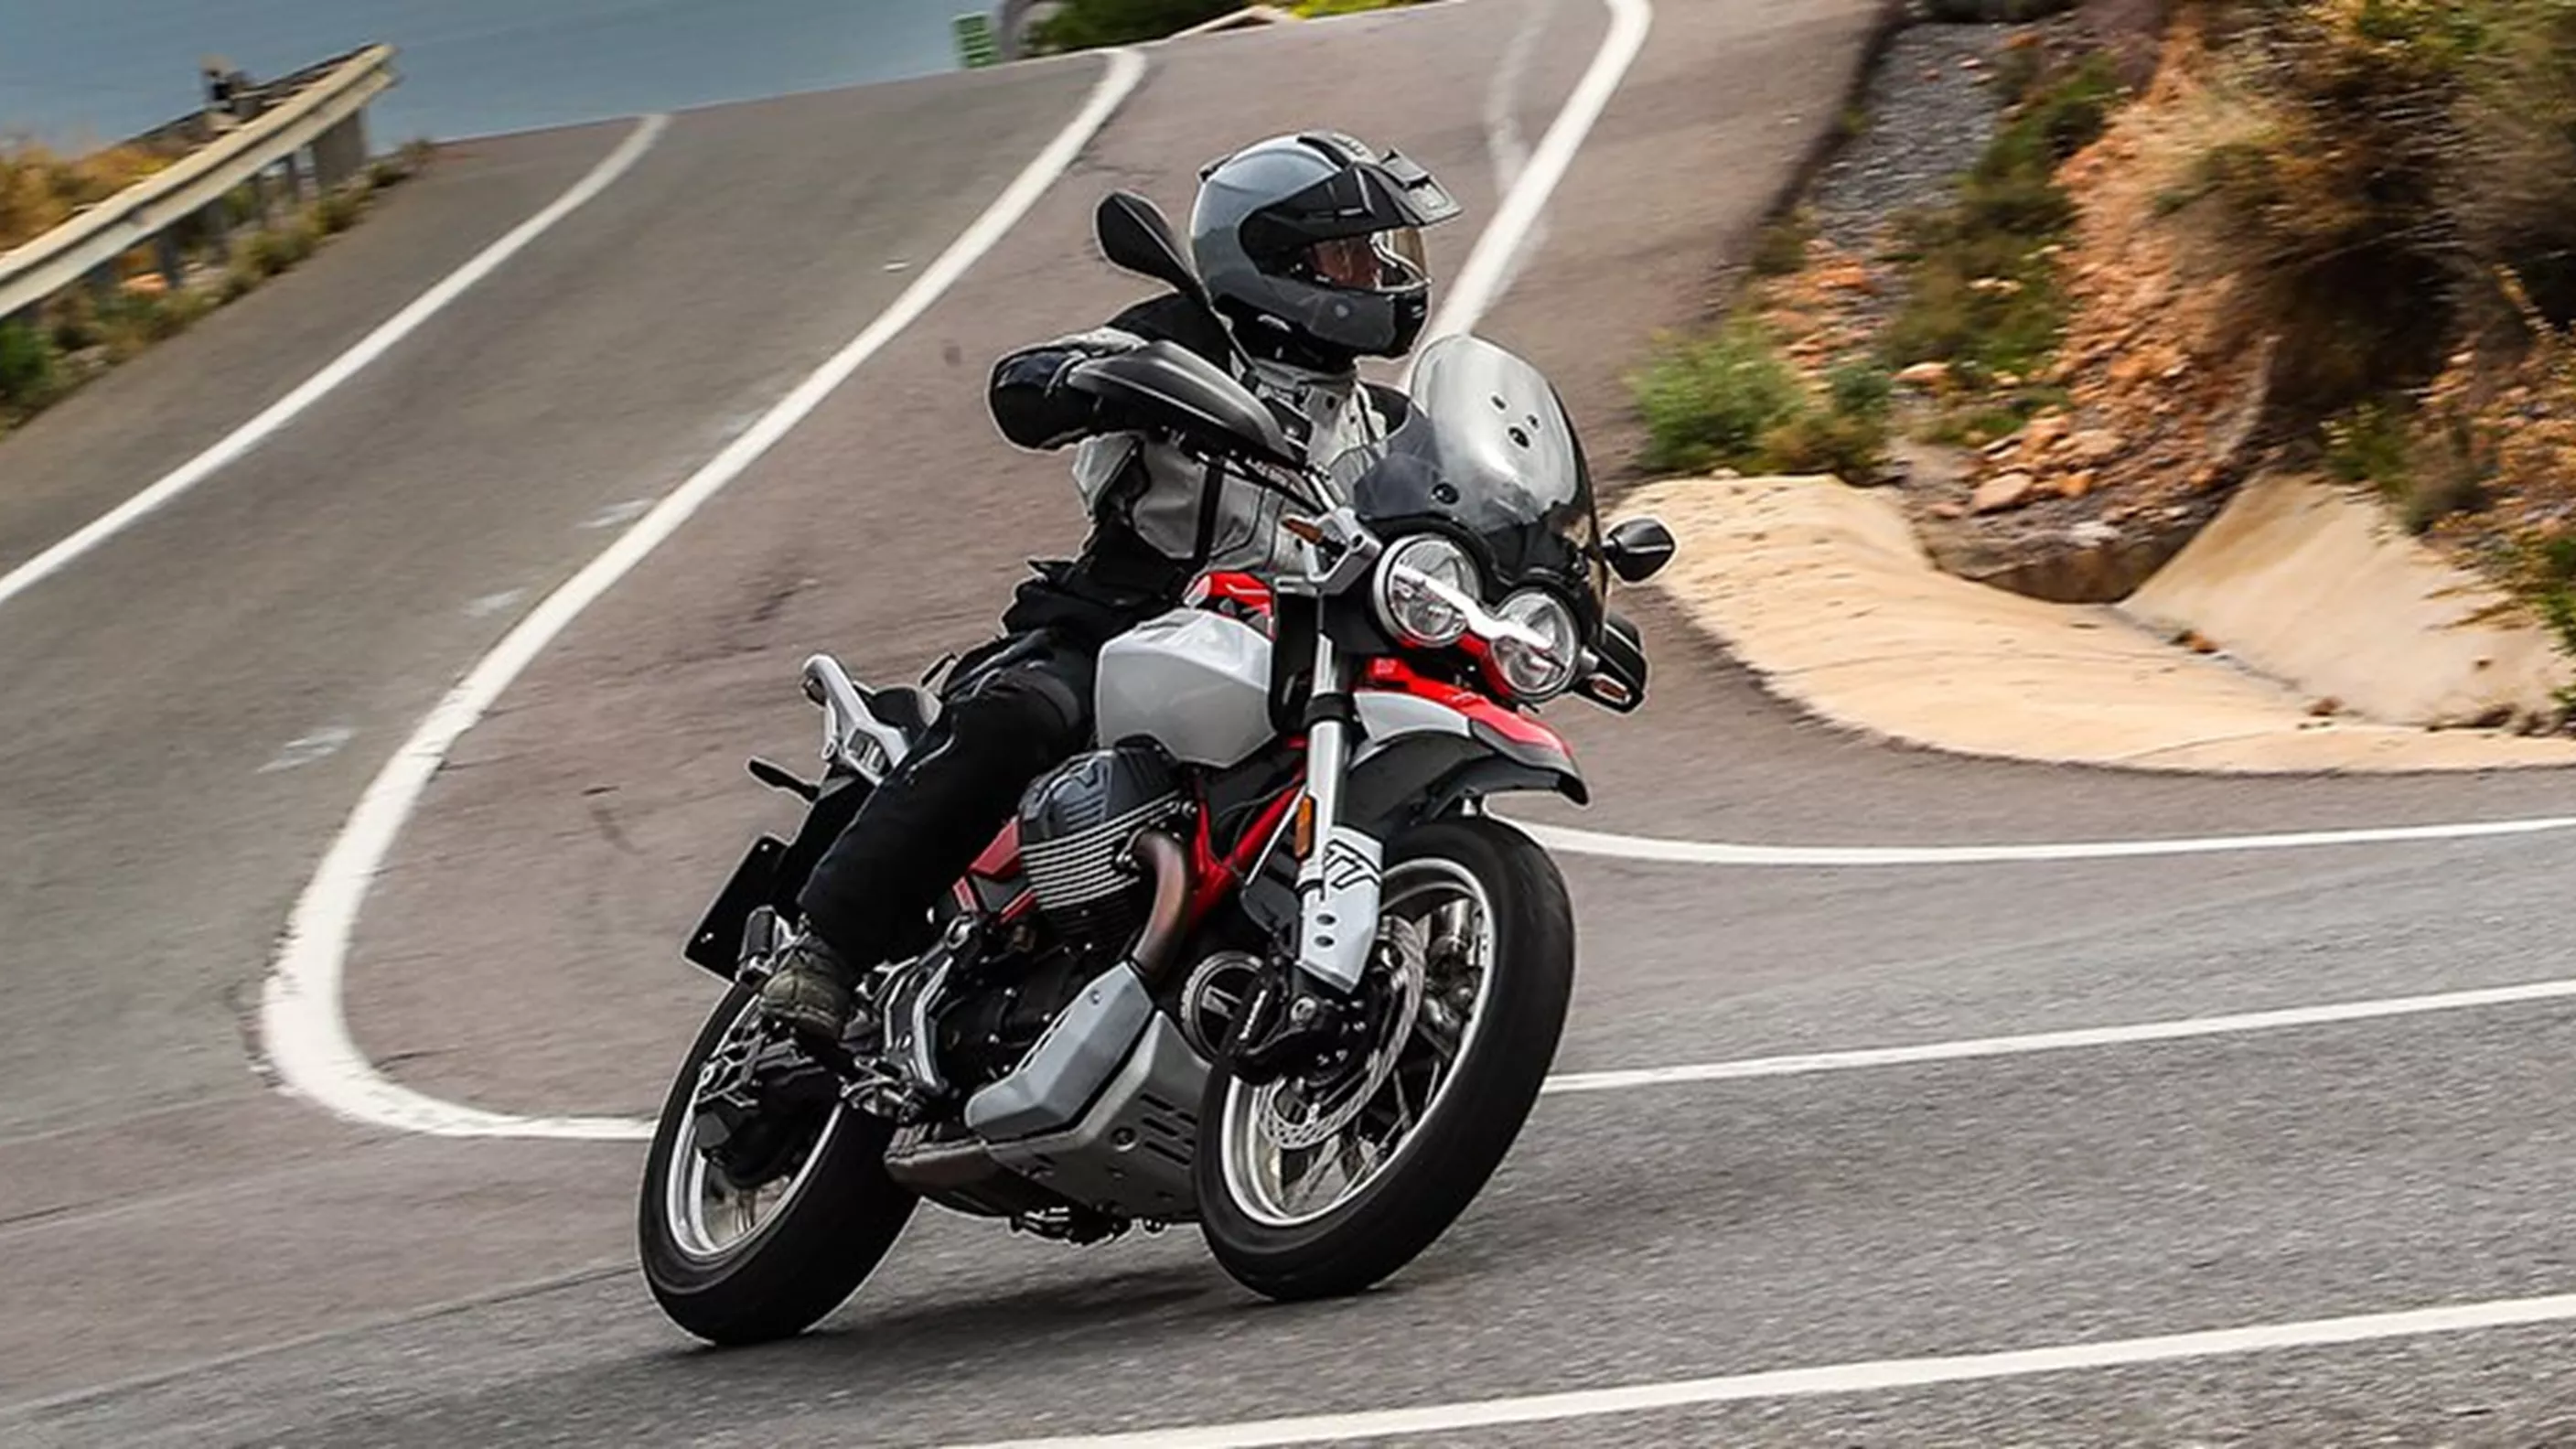 Moto Guzzi V85 TT rok modelowy 2024 w teście